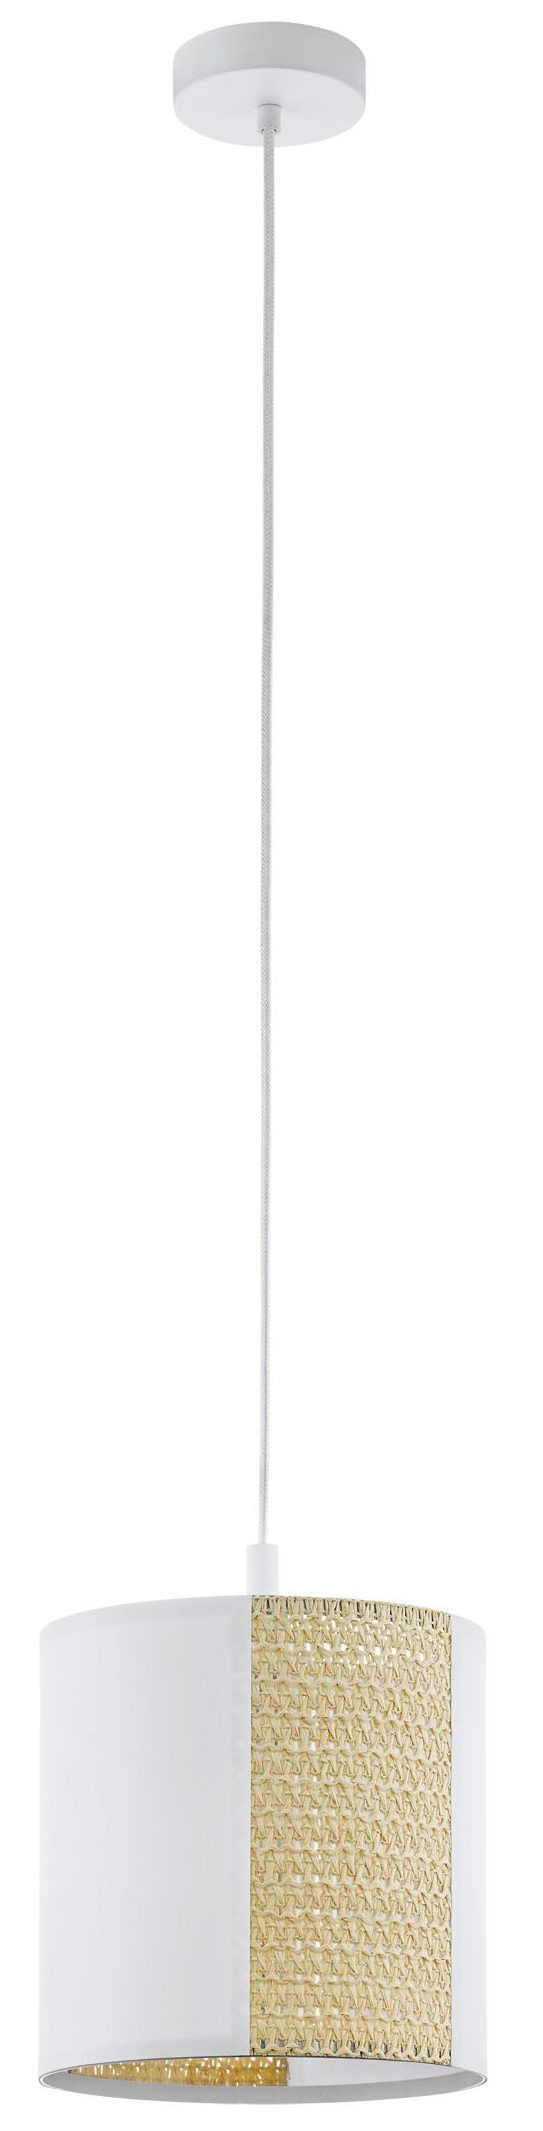 Hanglamp arnhem e27 stof wit/beige - wit Eglo Hanglamp 43401-EGLO